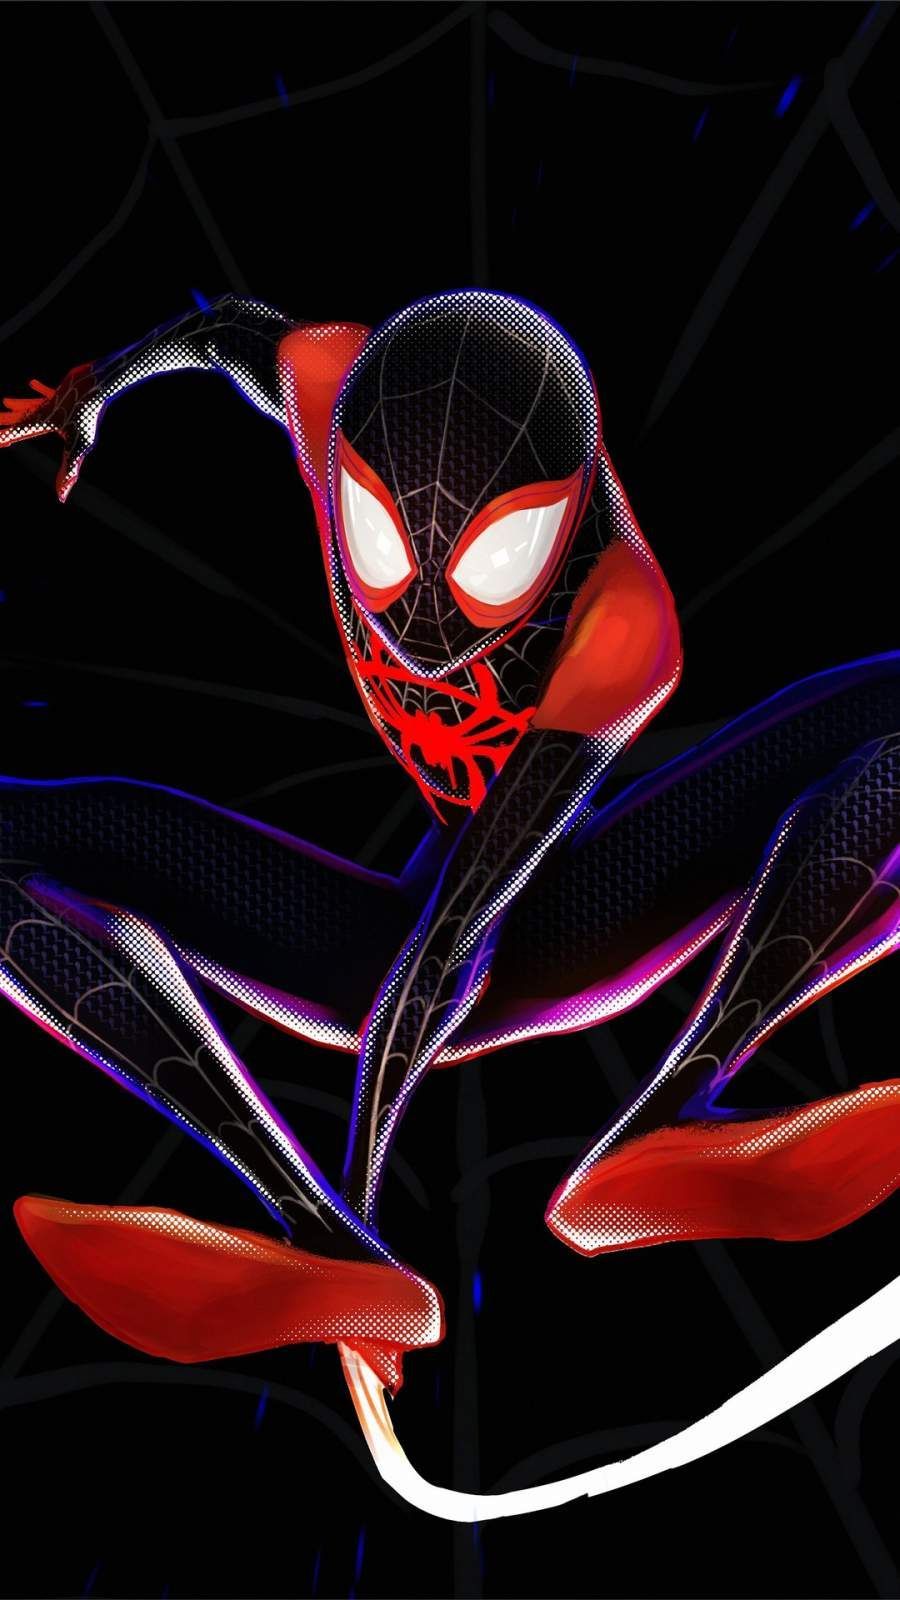 Spiderman 4k Miles Morales iPhone Wallpaper. Spiderman, Superhero wallpaper, Cool wallpaper for phones